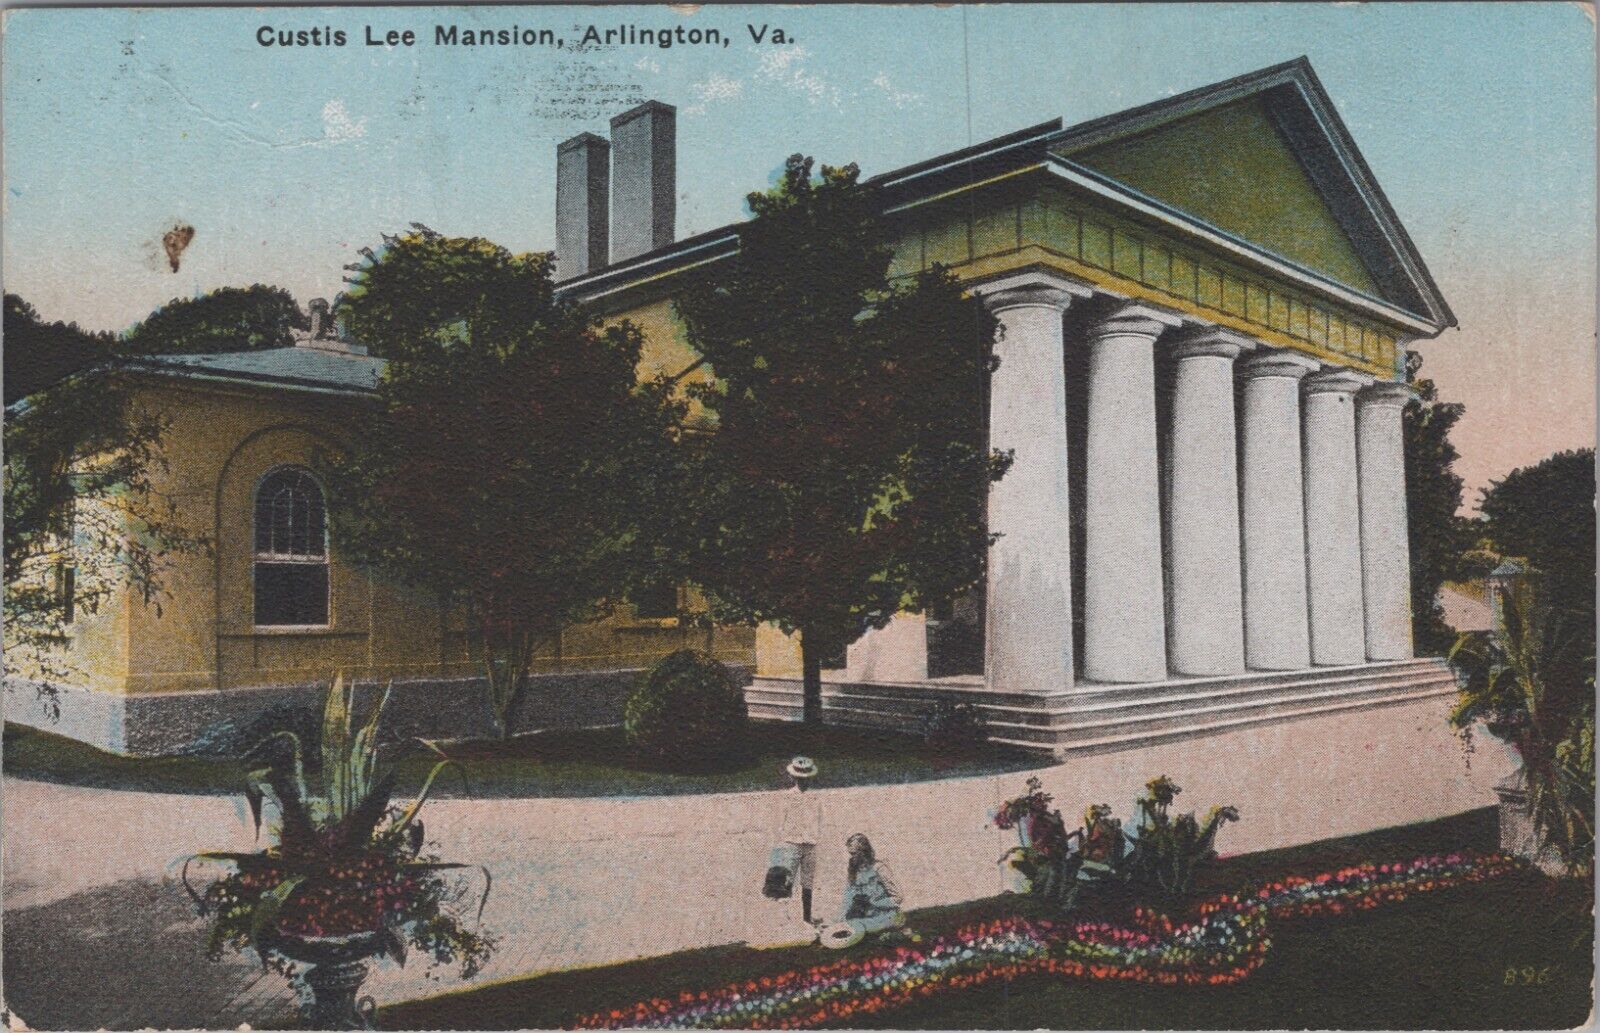 Curtis Lee Mansion, Arlington, Virginia VA Exterior UNP c1910s Postcard 6209c4